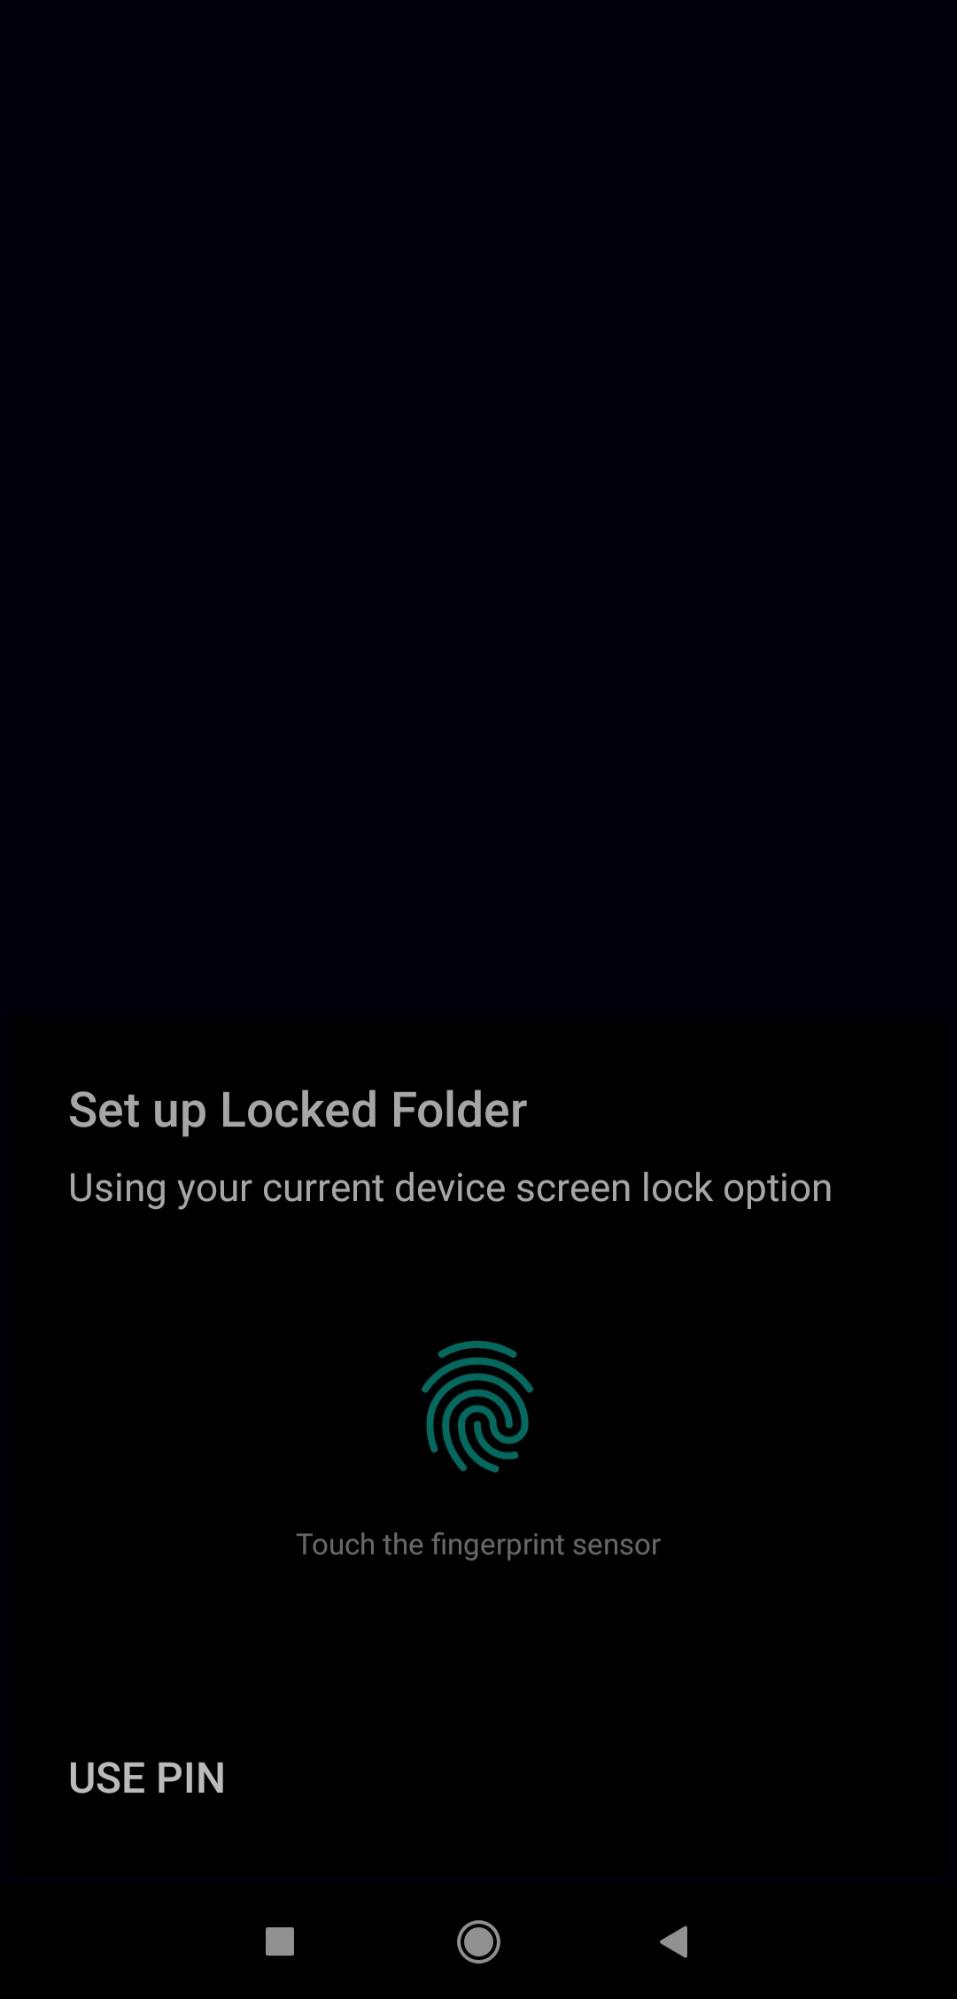 Set up locked folder with pass lock